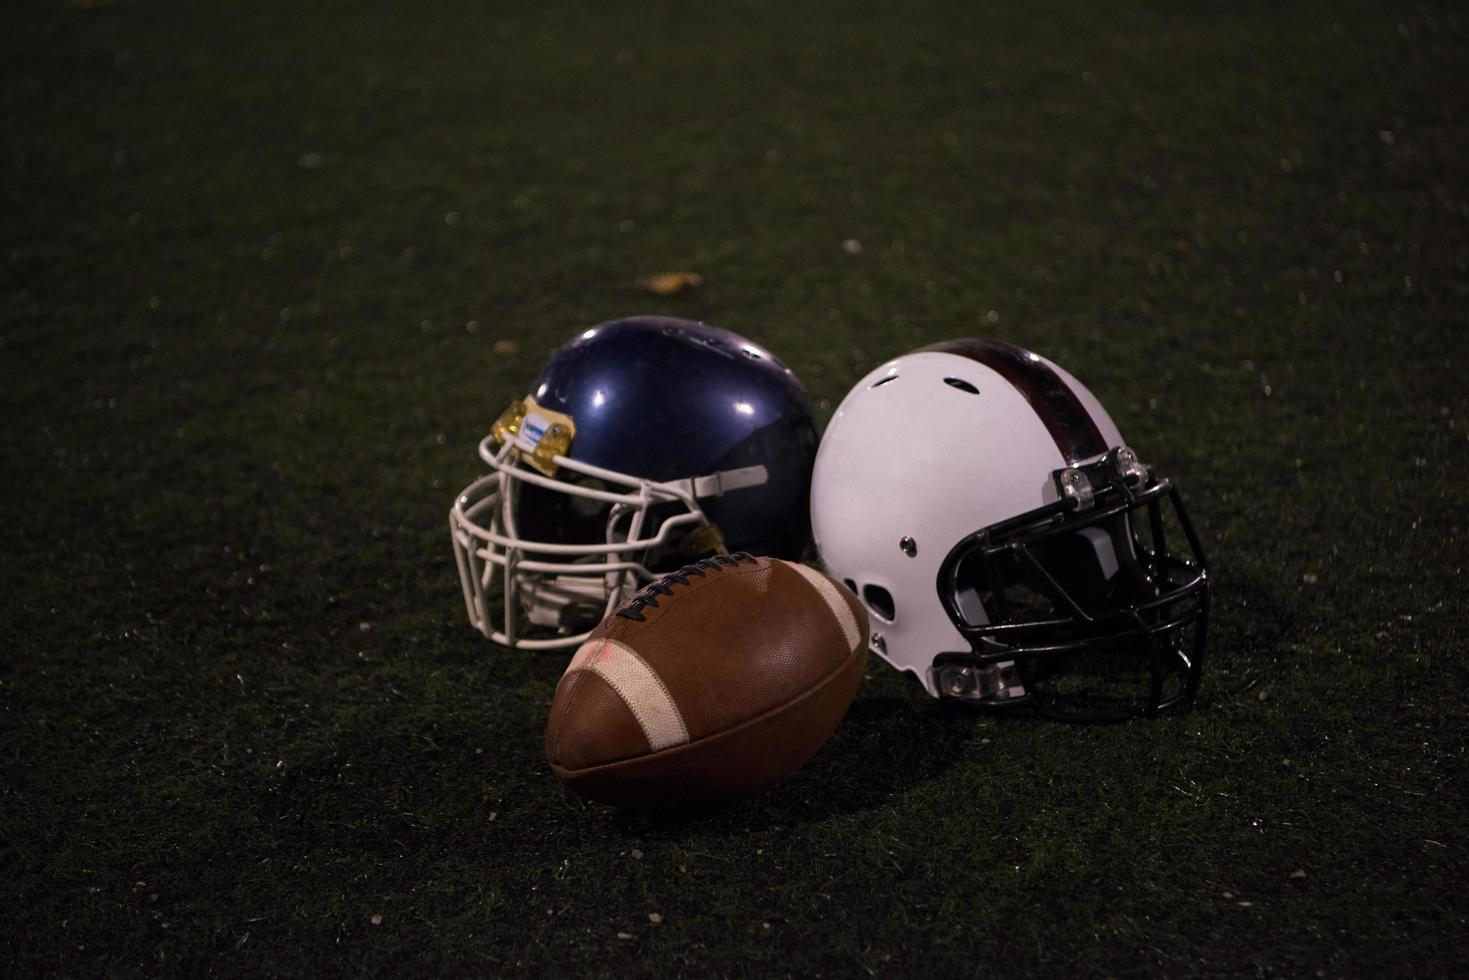 american football and helmets photo